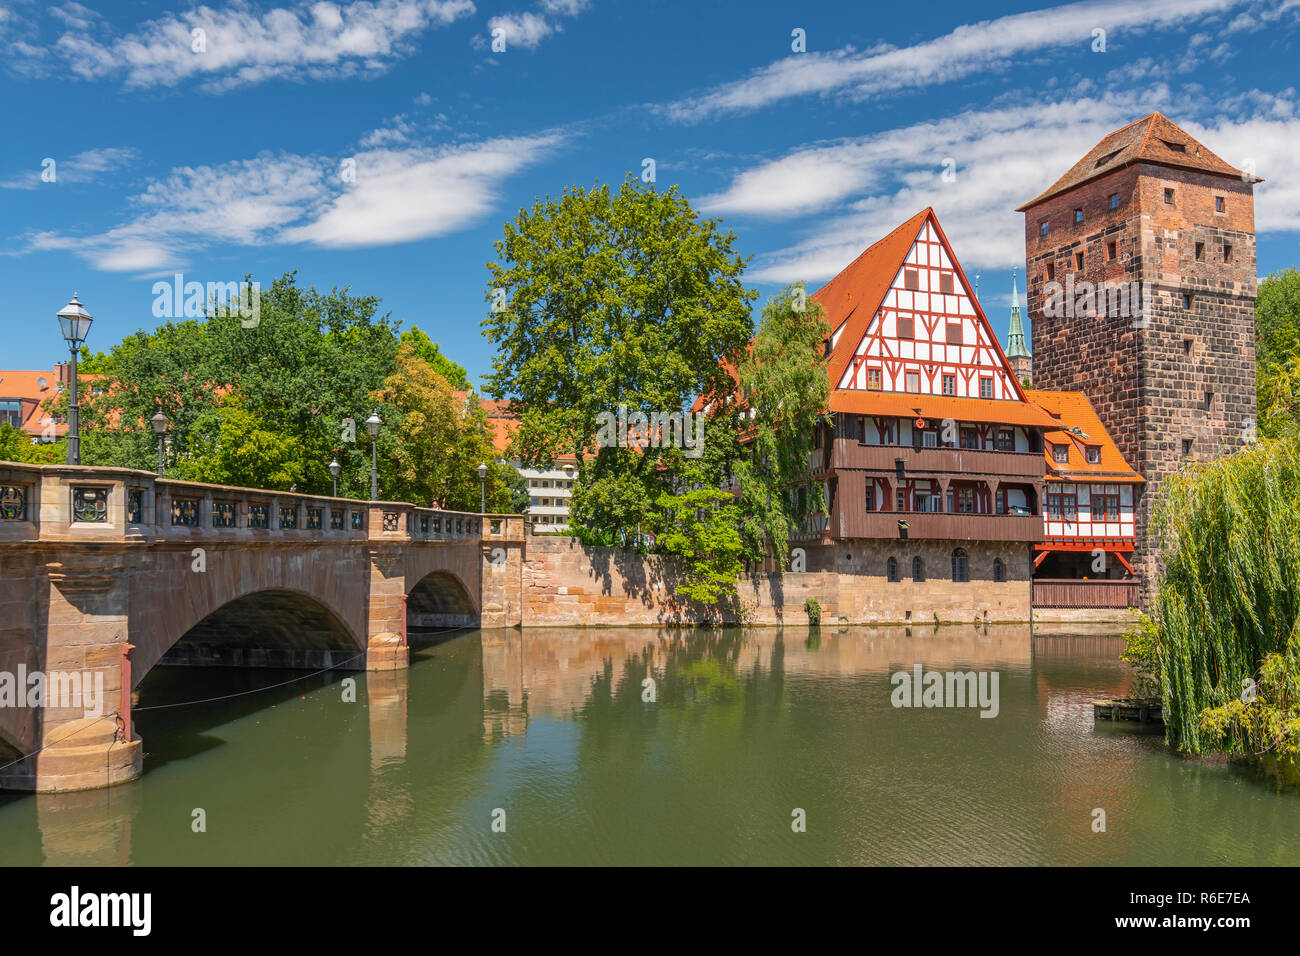 Vista del Vino storico Archivio o Weinstadel, Water Tower e Hangmans modo o Henkersteg accanto al fiume Pegnitz in Nuremberg, Tedesco Foto Stock